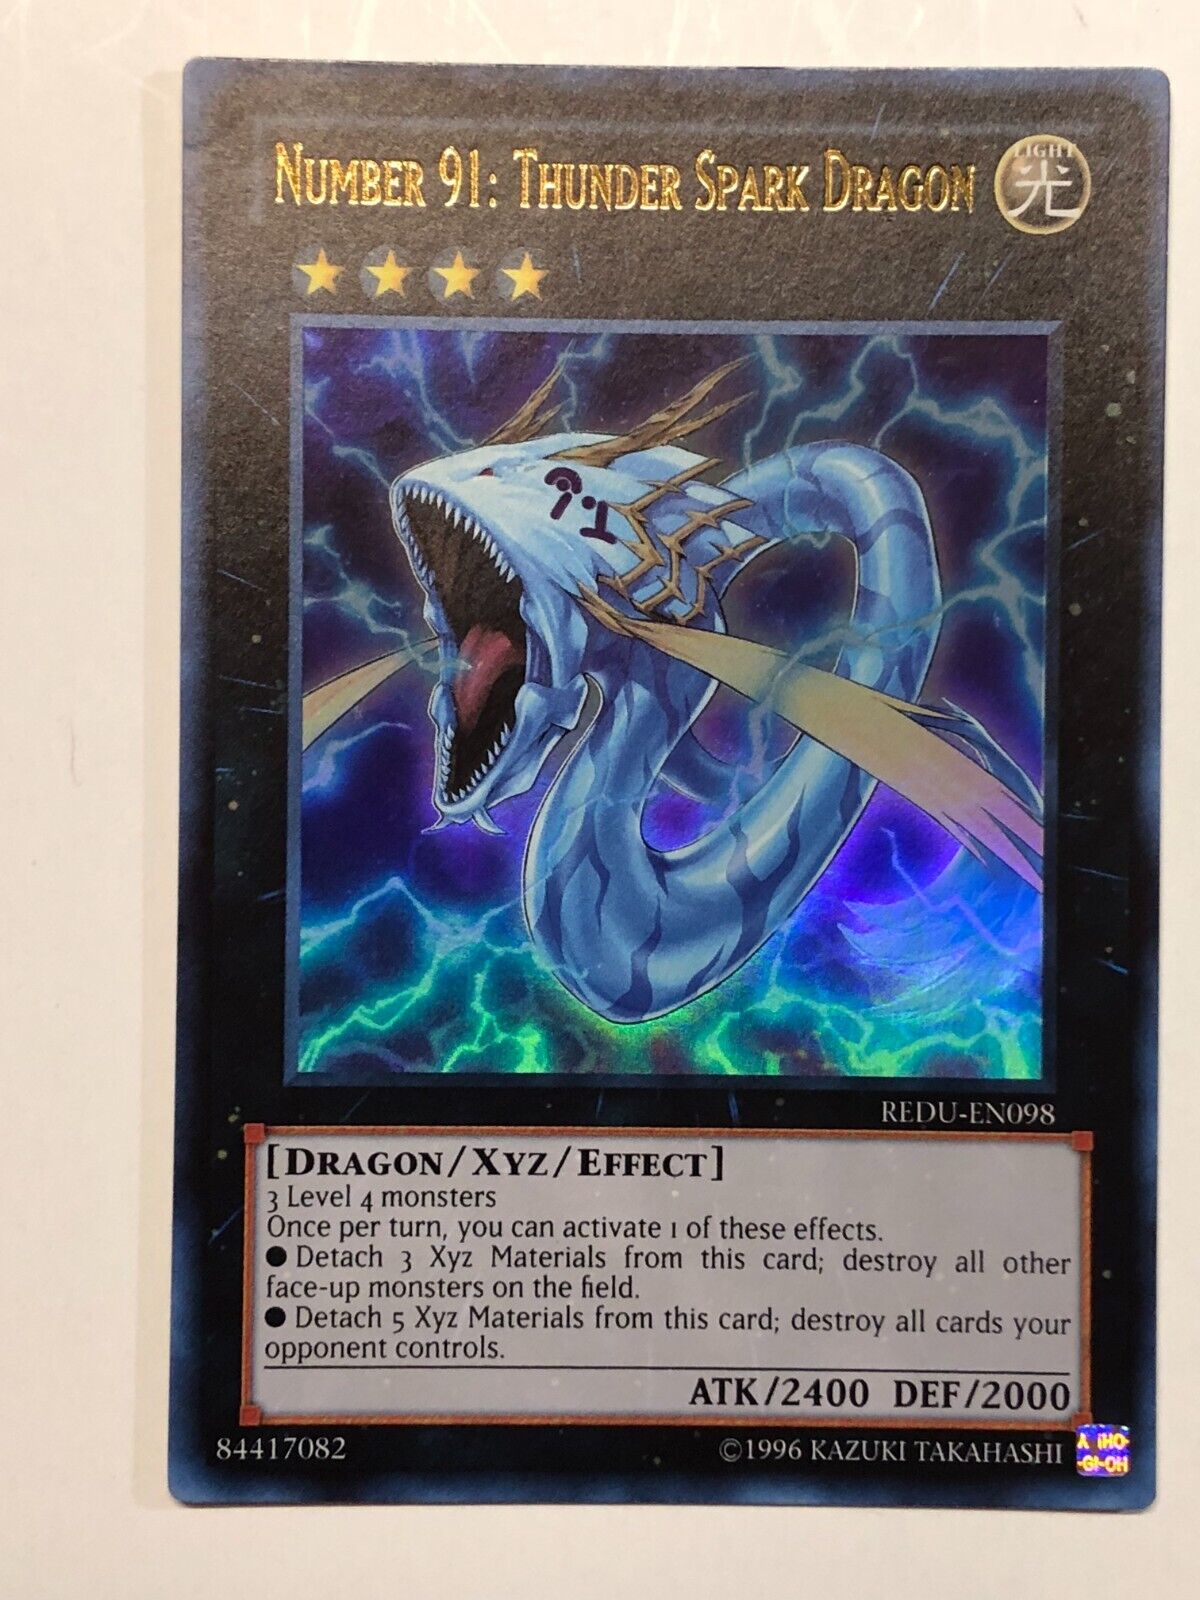 Yugioh Card **Number 91: Thunder Spark Dragon** Ultra Rare - REDU-EN098 - NM